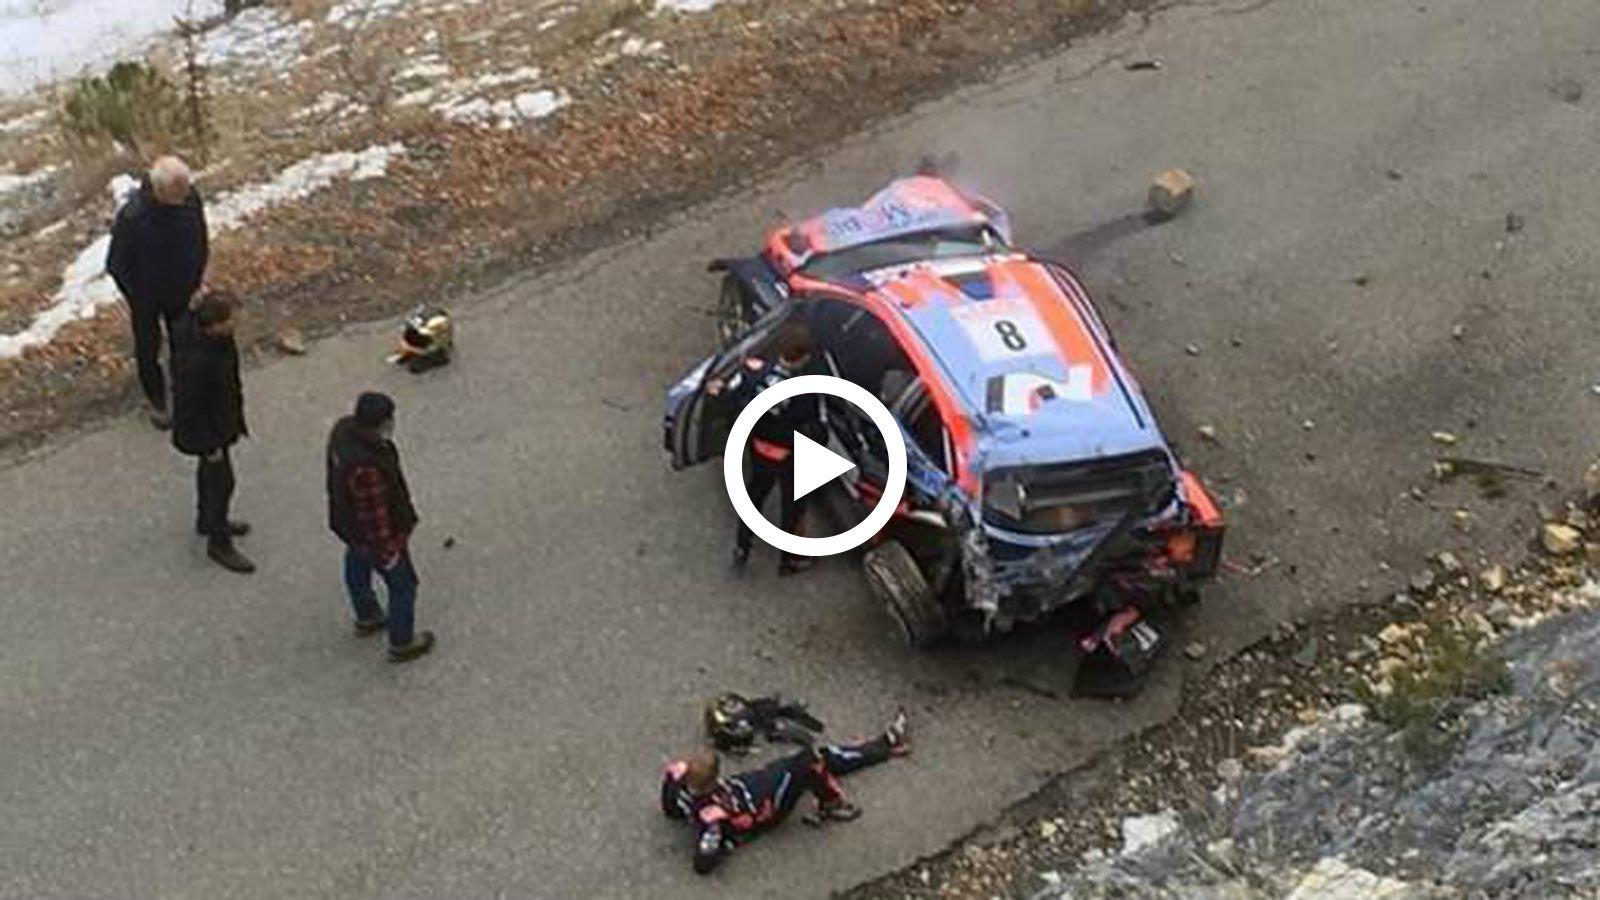 VIDEO: To ασύλληπτο ατύχημα του Τανάκ στο Monte Carlo